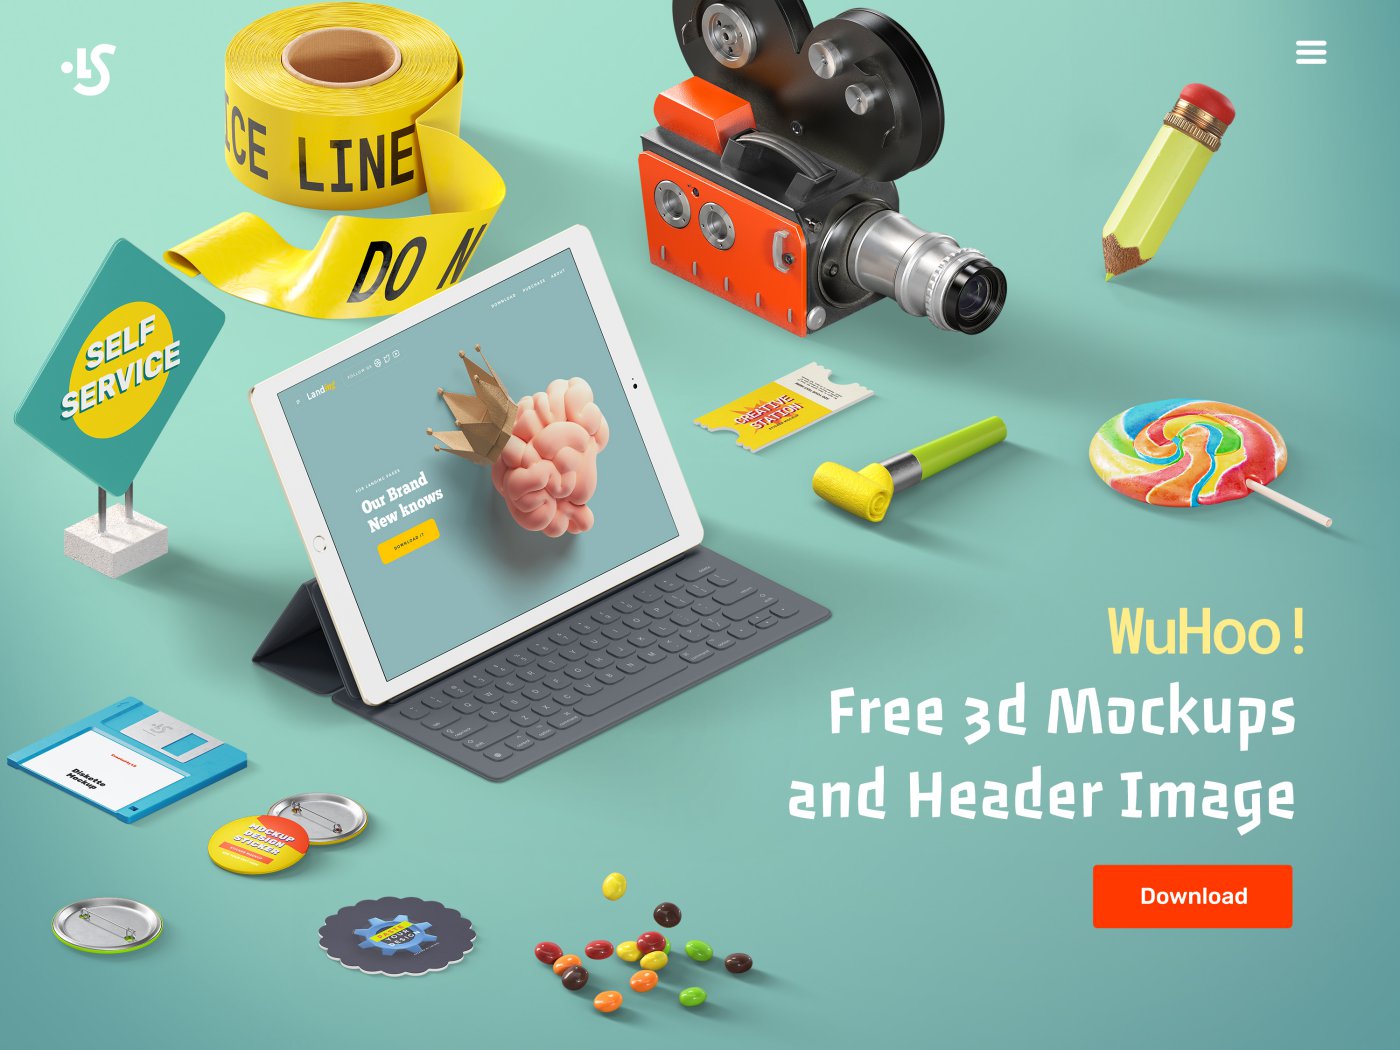 Free 3d Mockups and Header Image